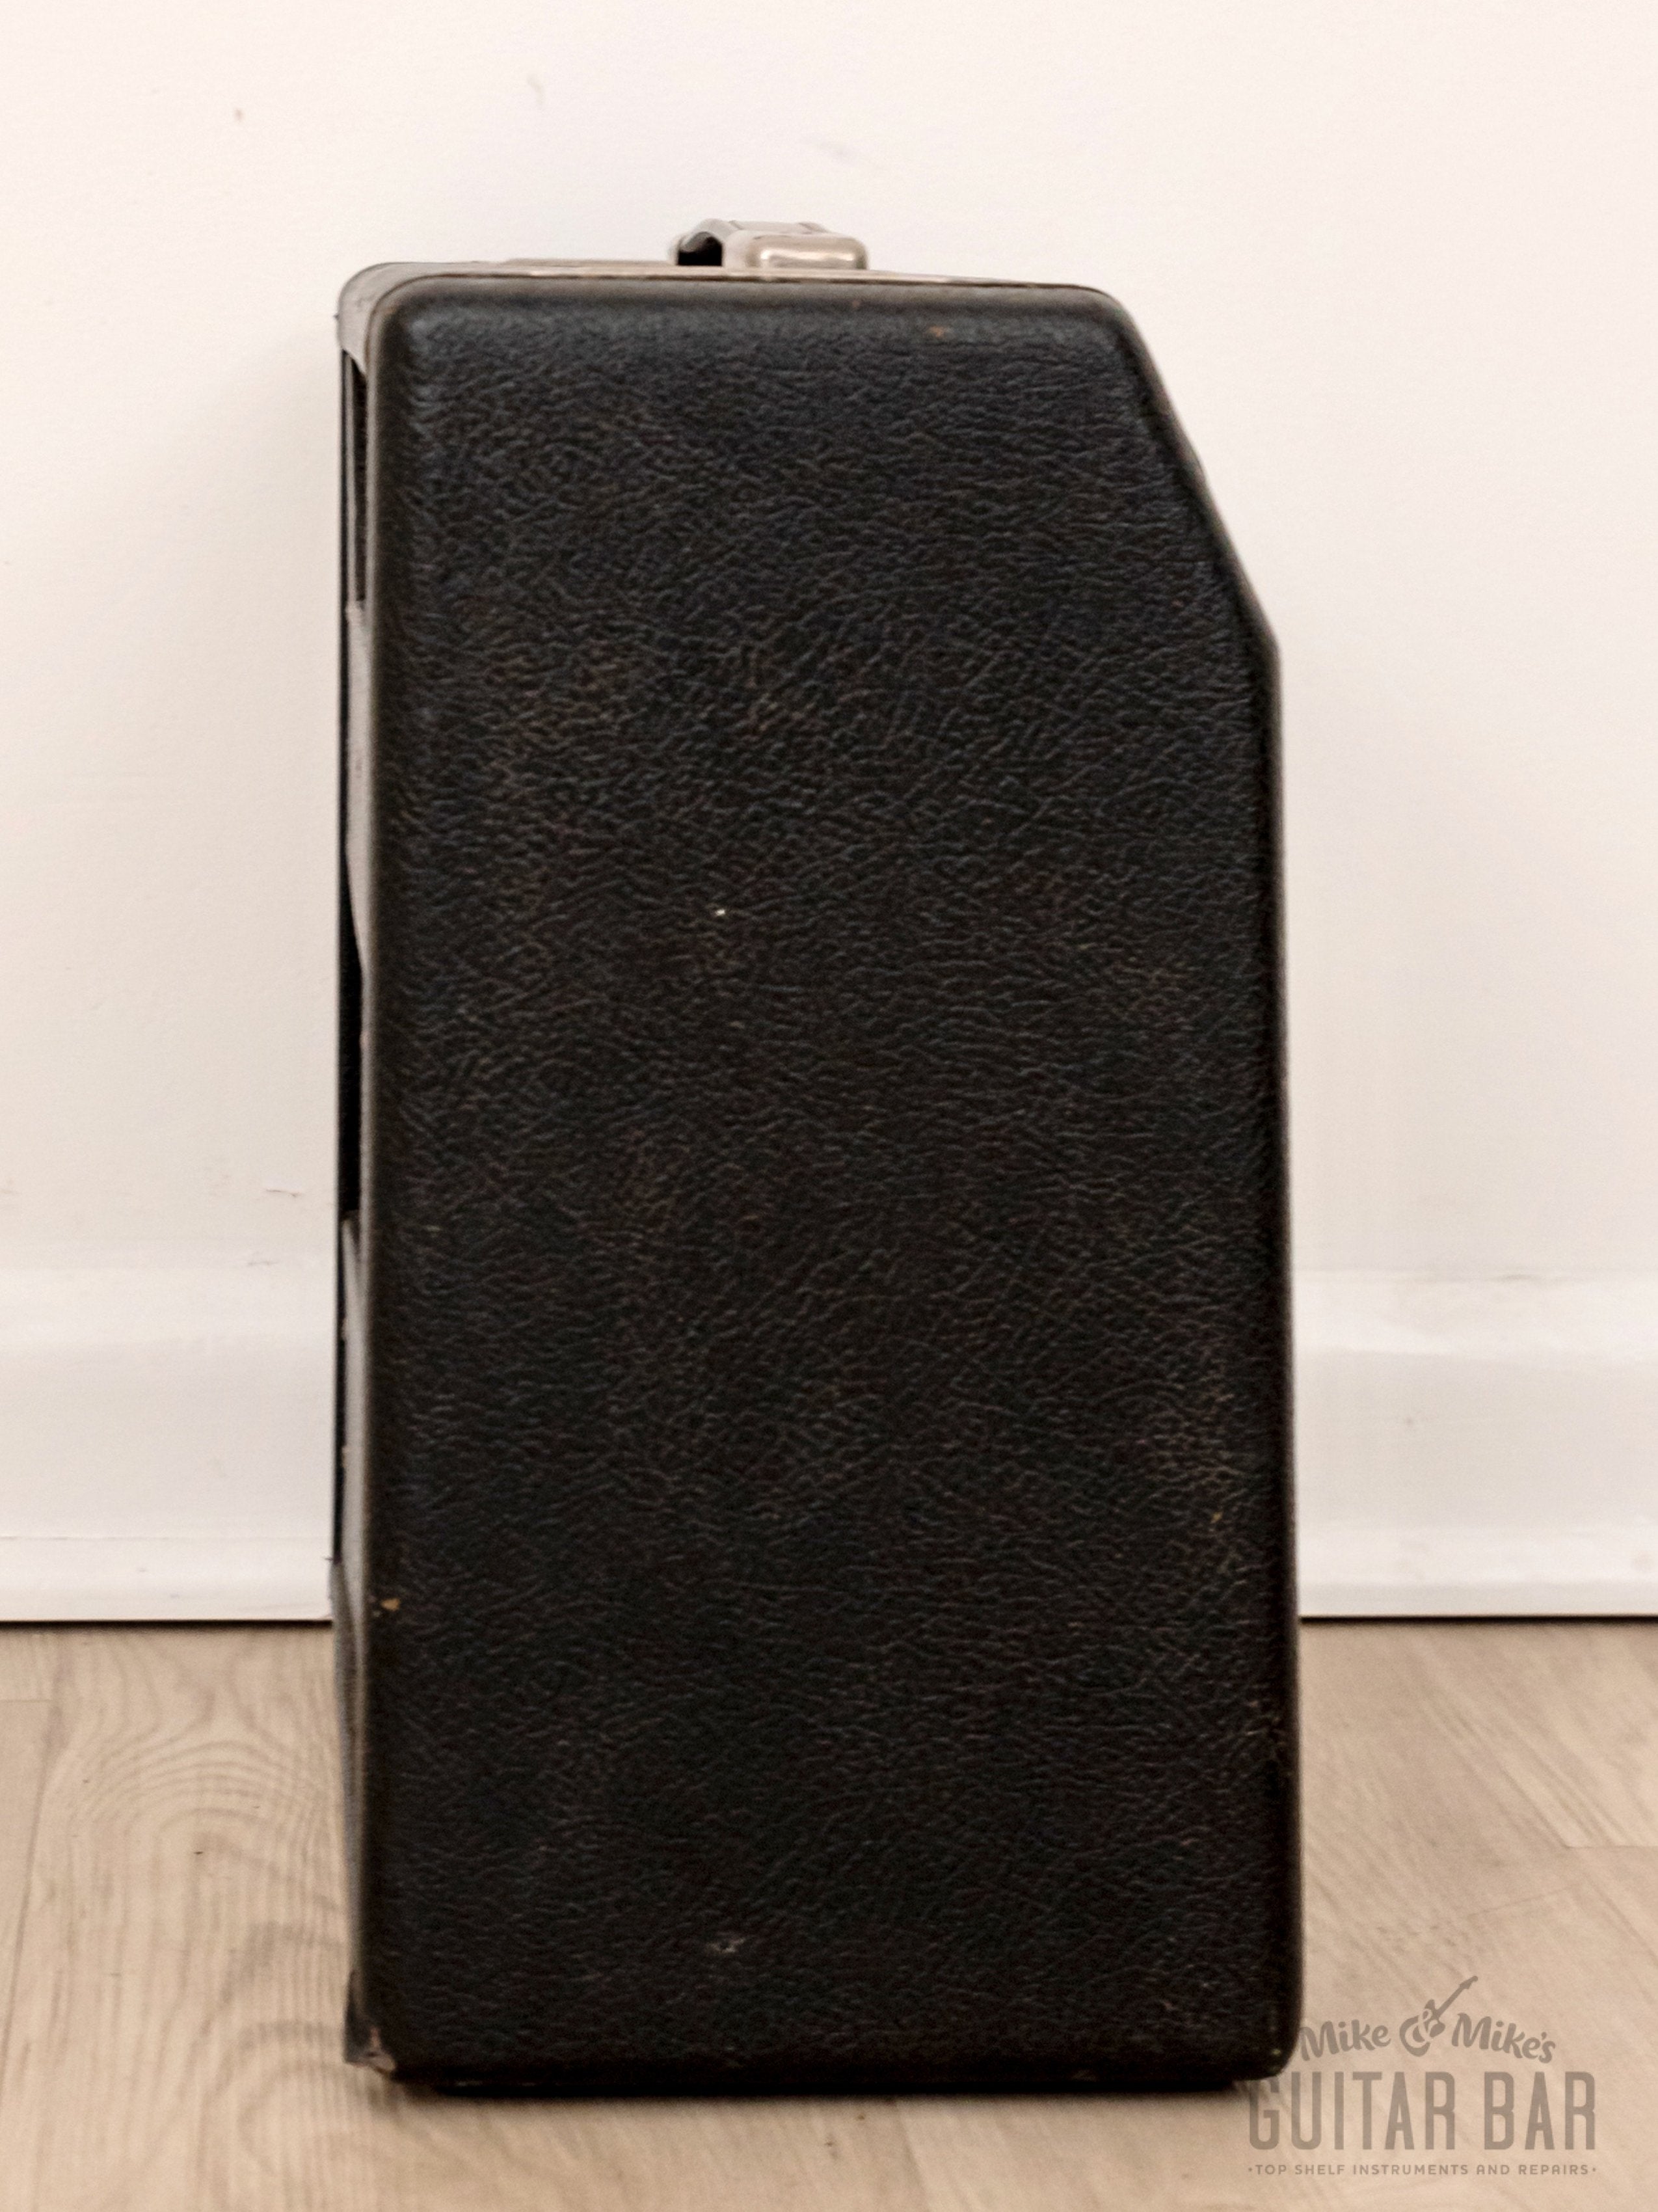 1965 Fender Vibro Champ Vintage Black Panel Tube Amp 1x8, Class A, FEIC